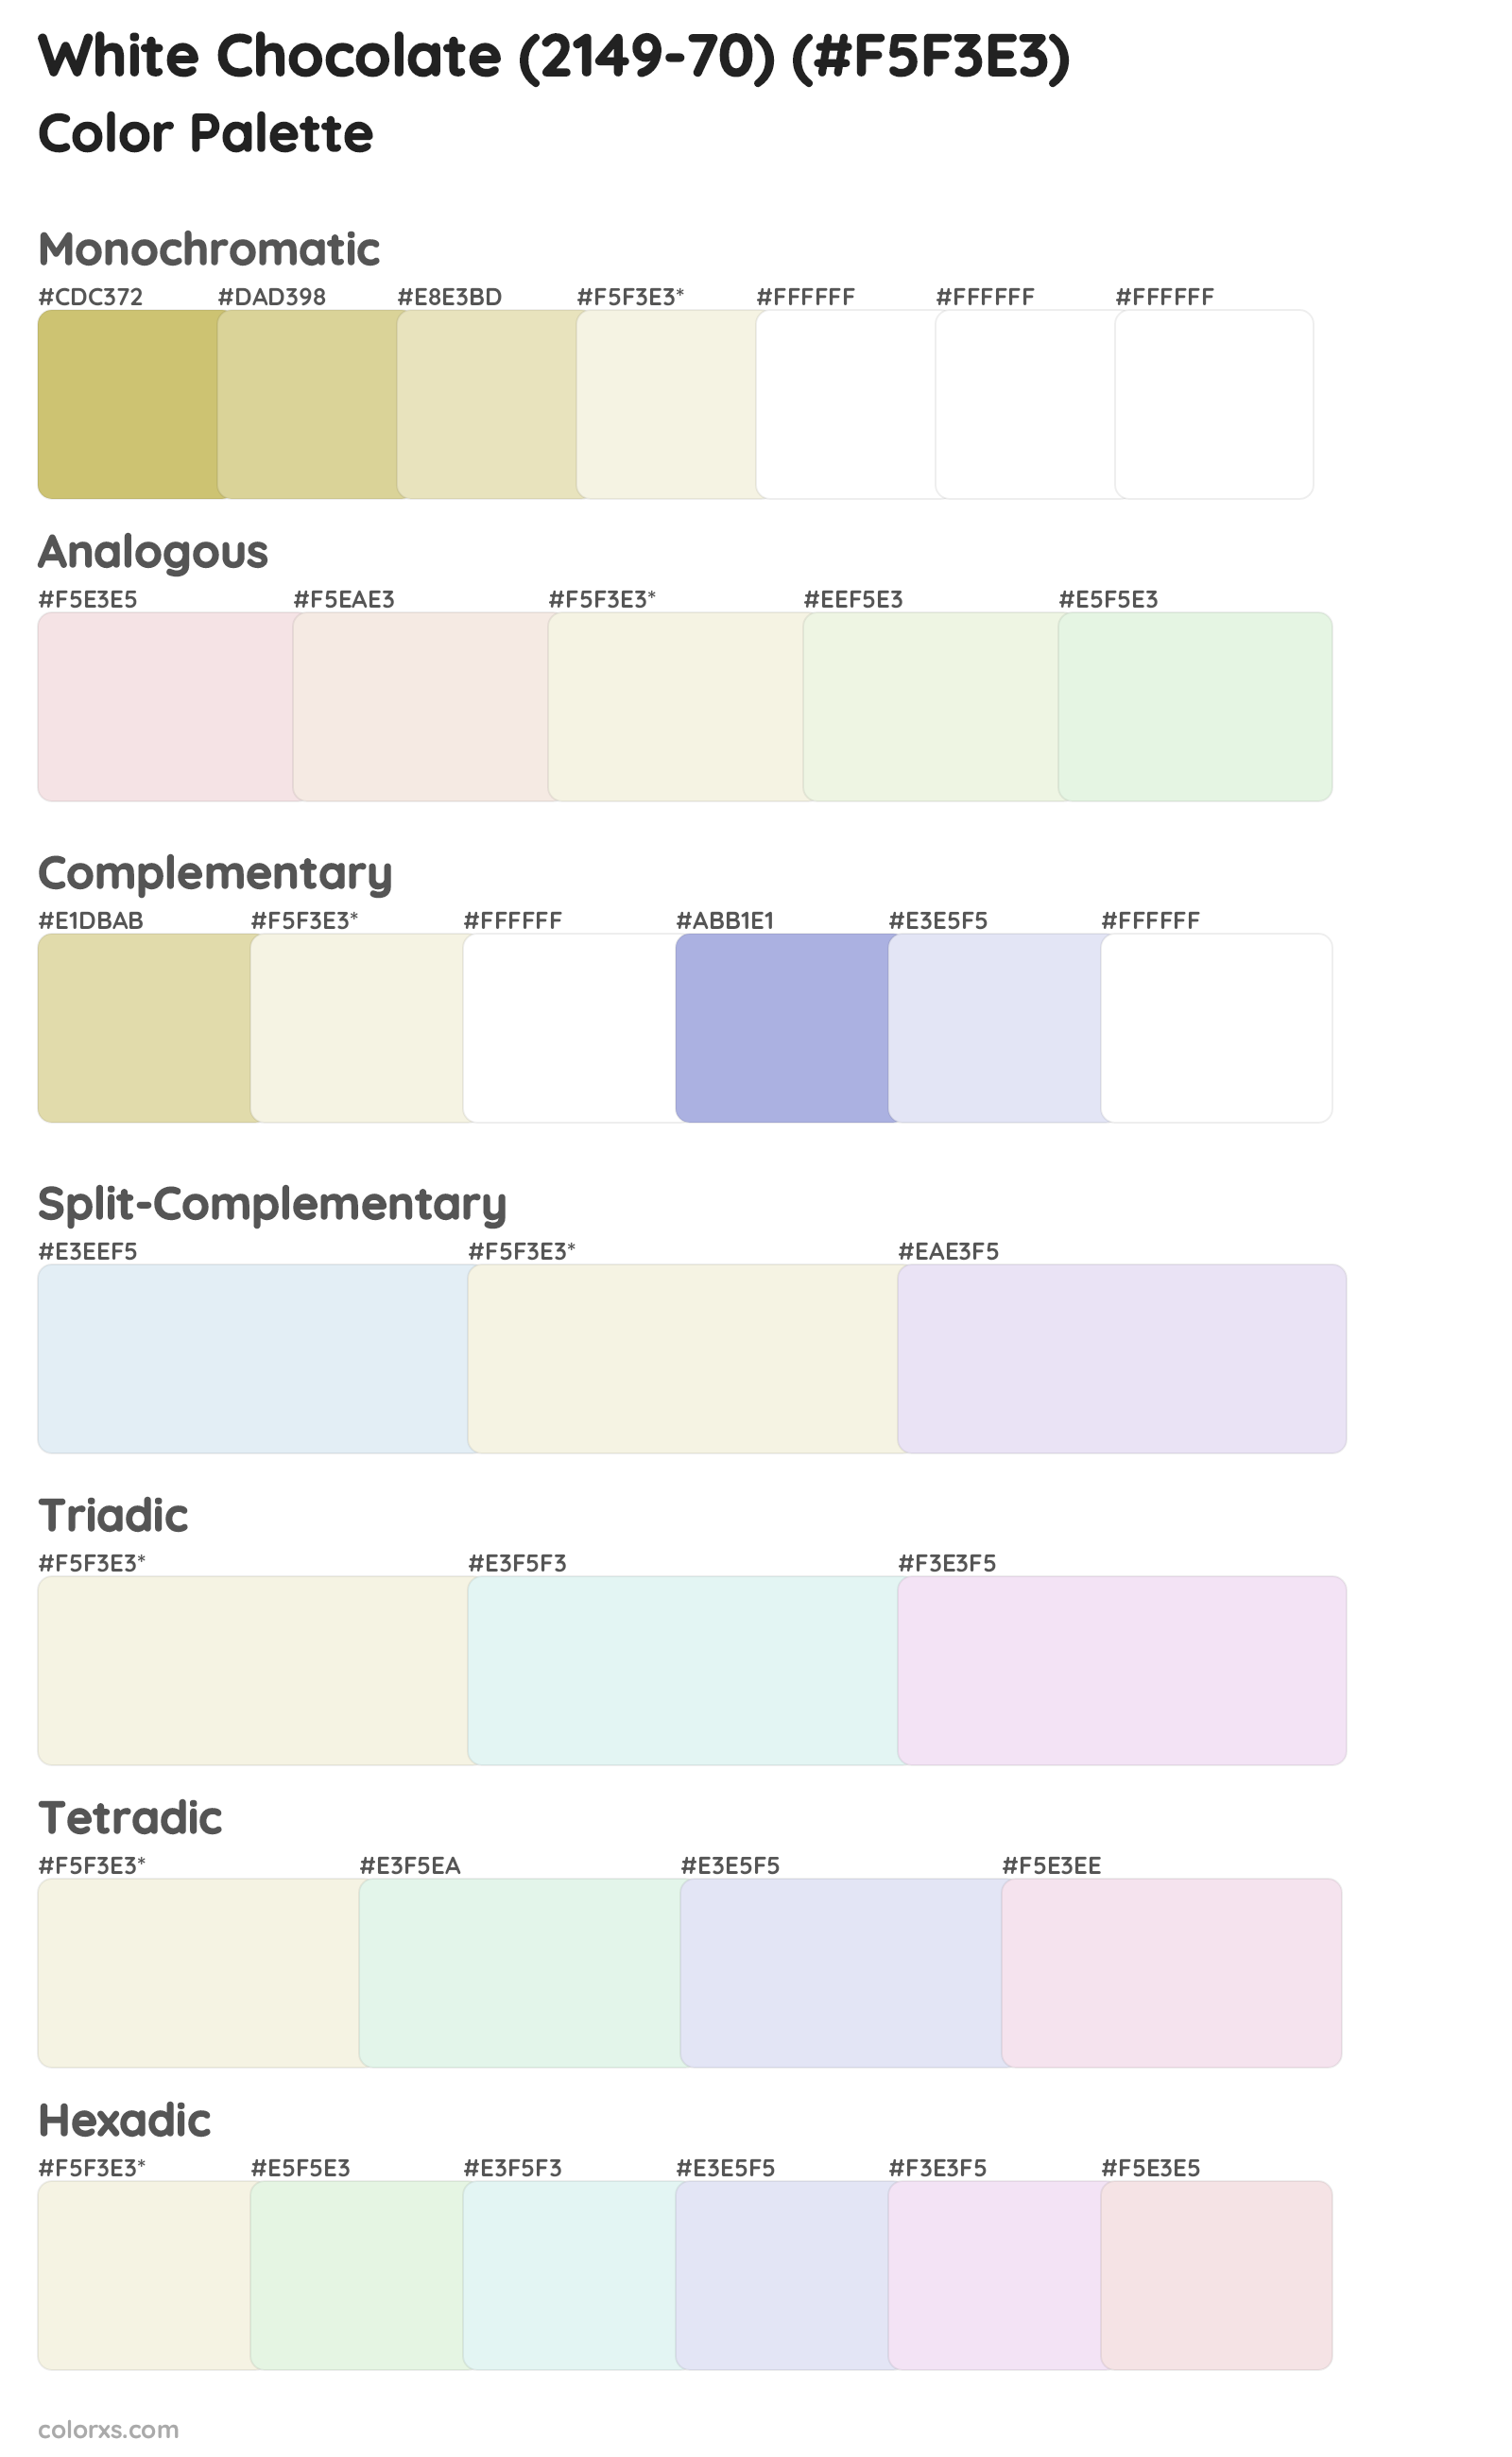 White Chocolate (2149-70) Color Scheme Palettes